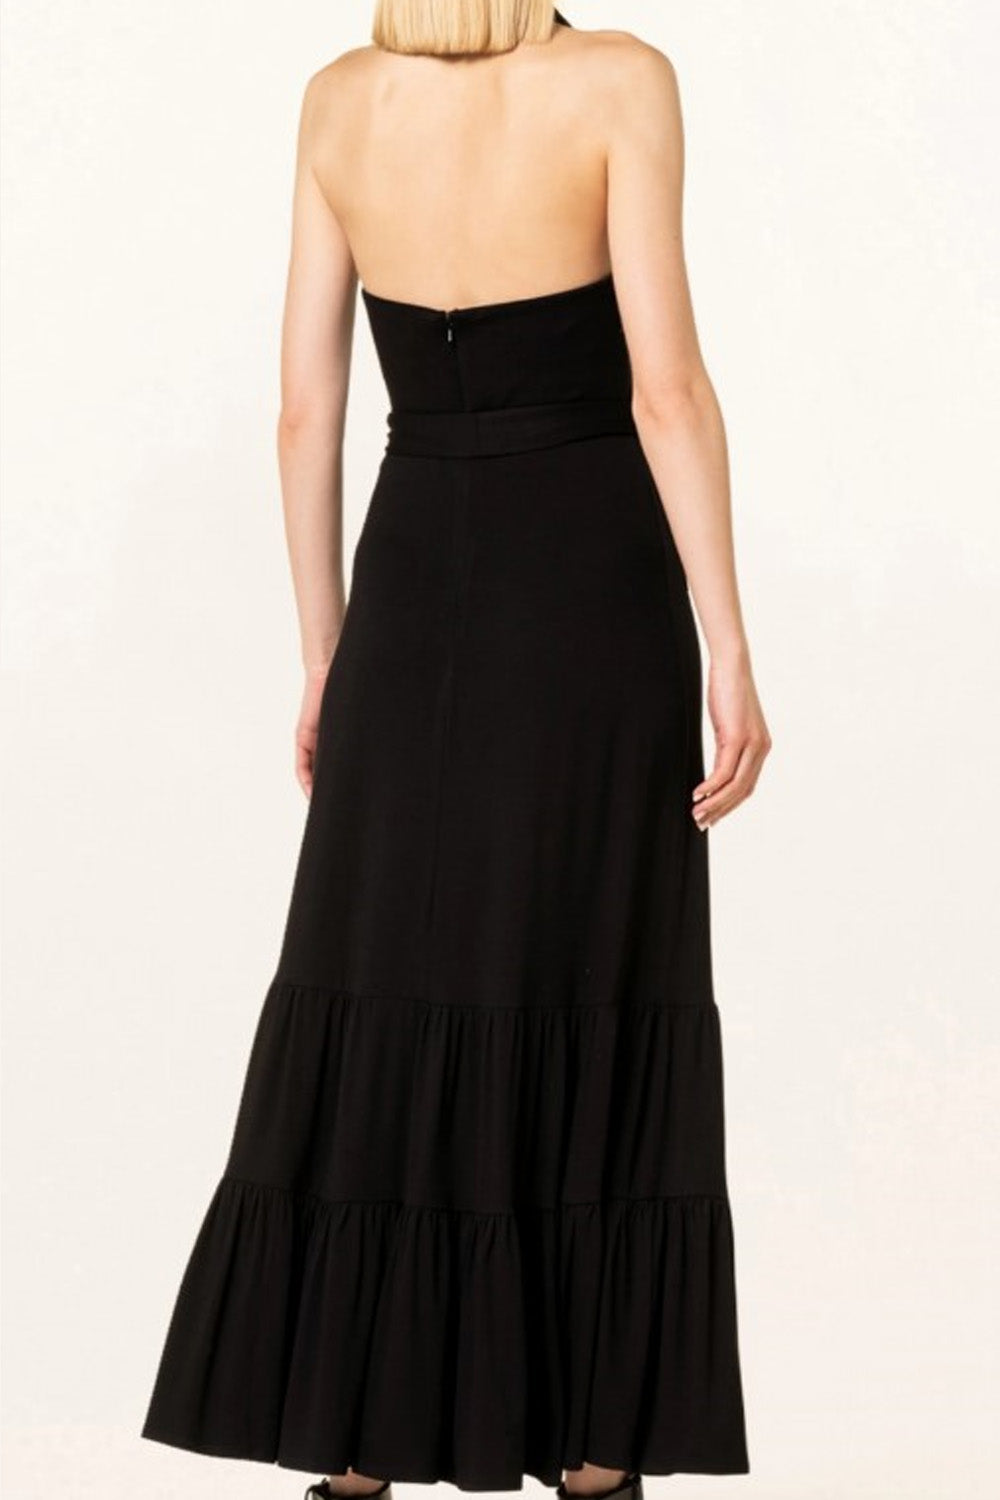 Eden Black Dress